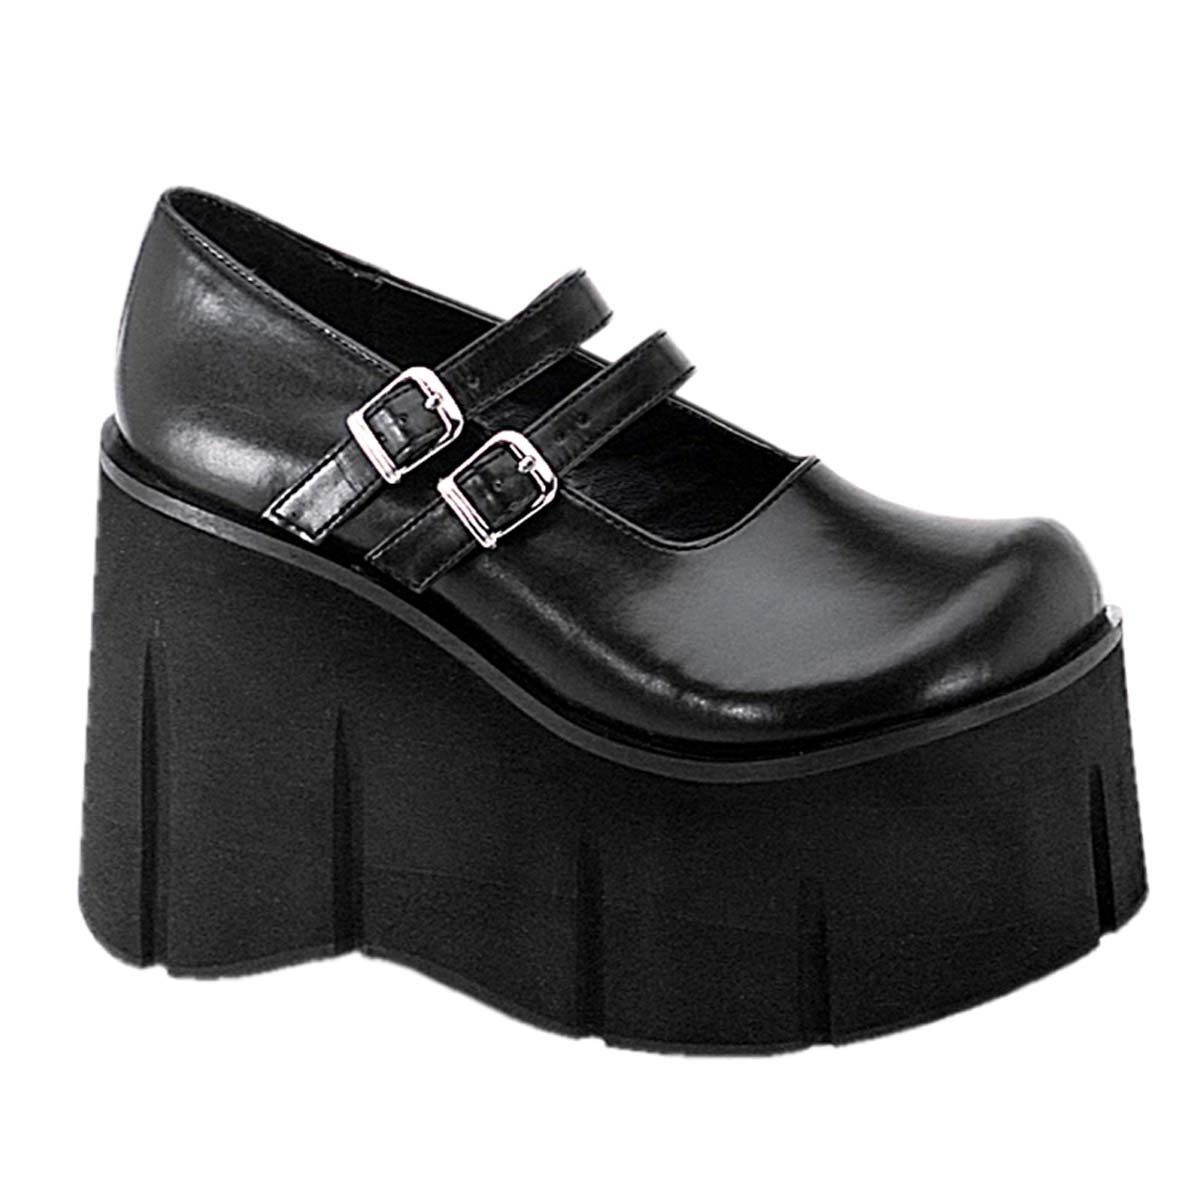 Pleaser Demonia Kera-08 - Black Pu in Shoes & Flats - $67.95